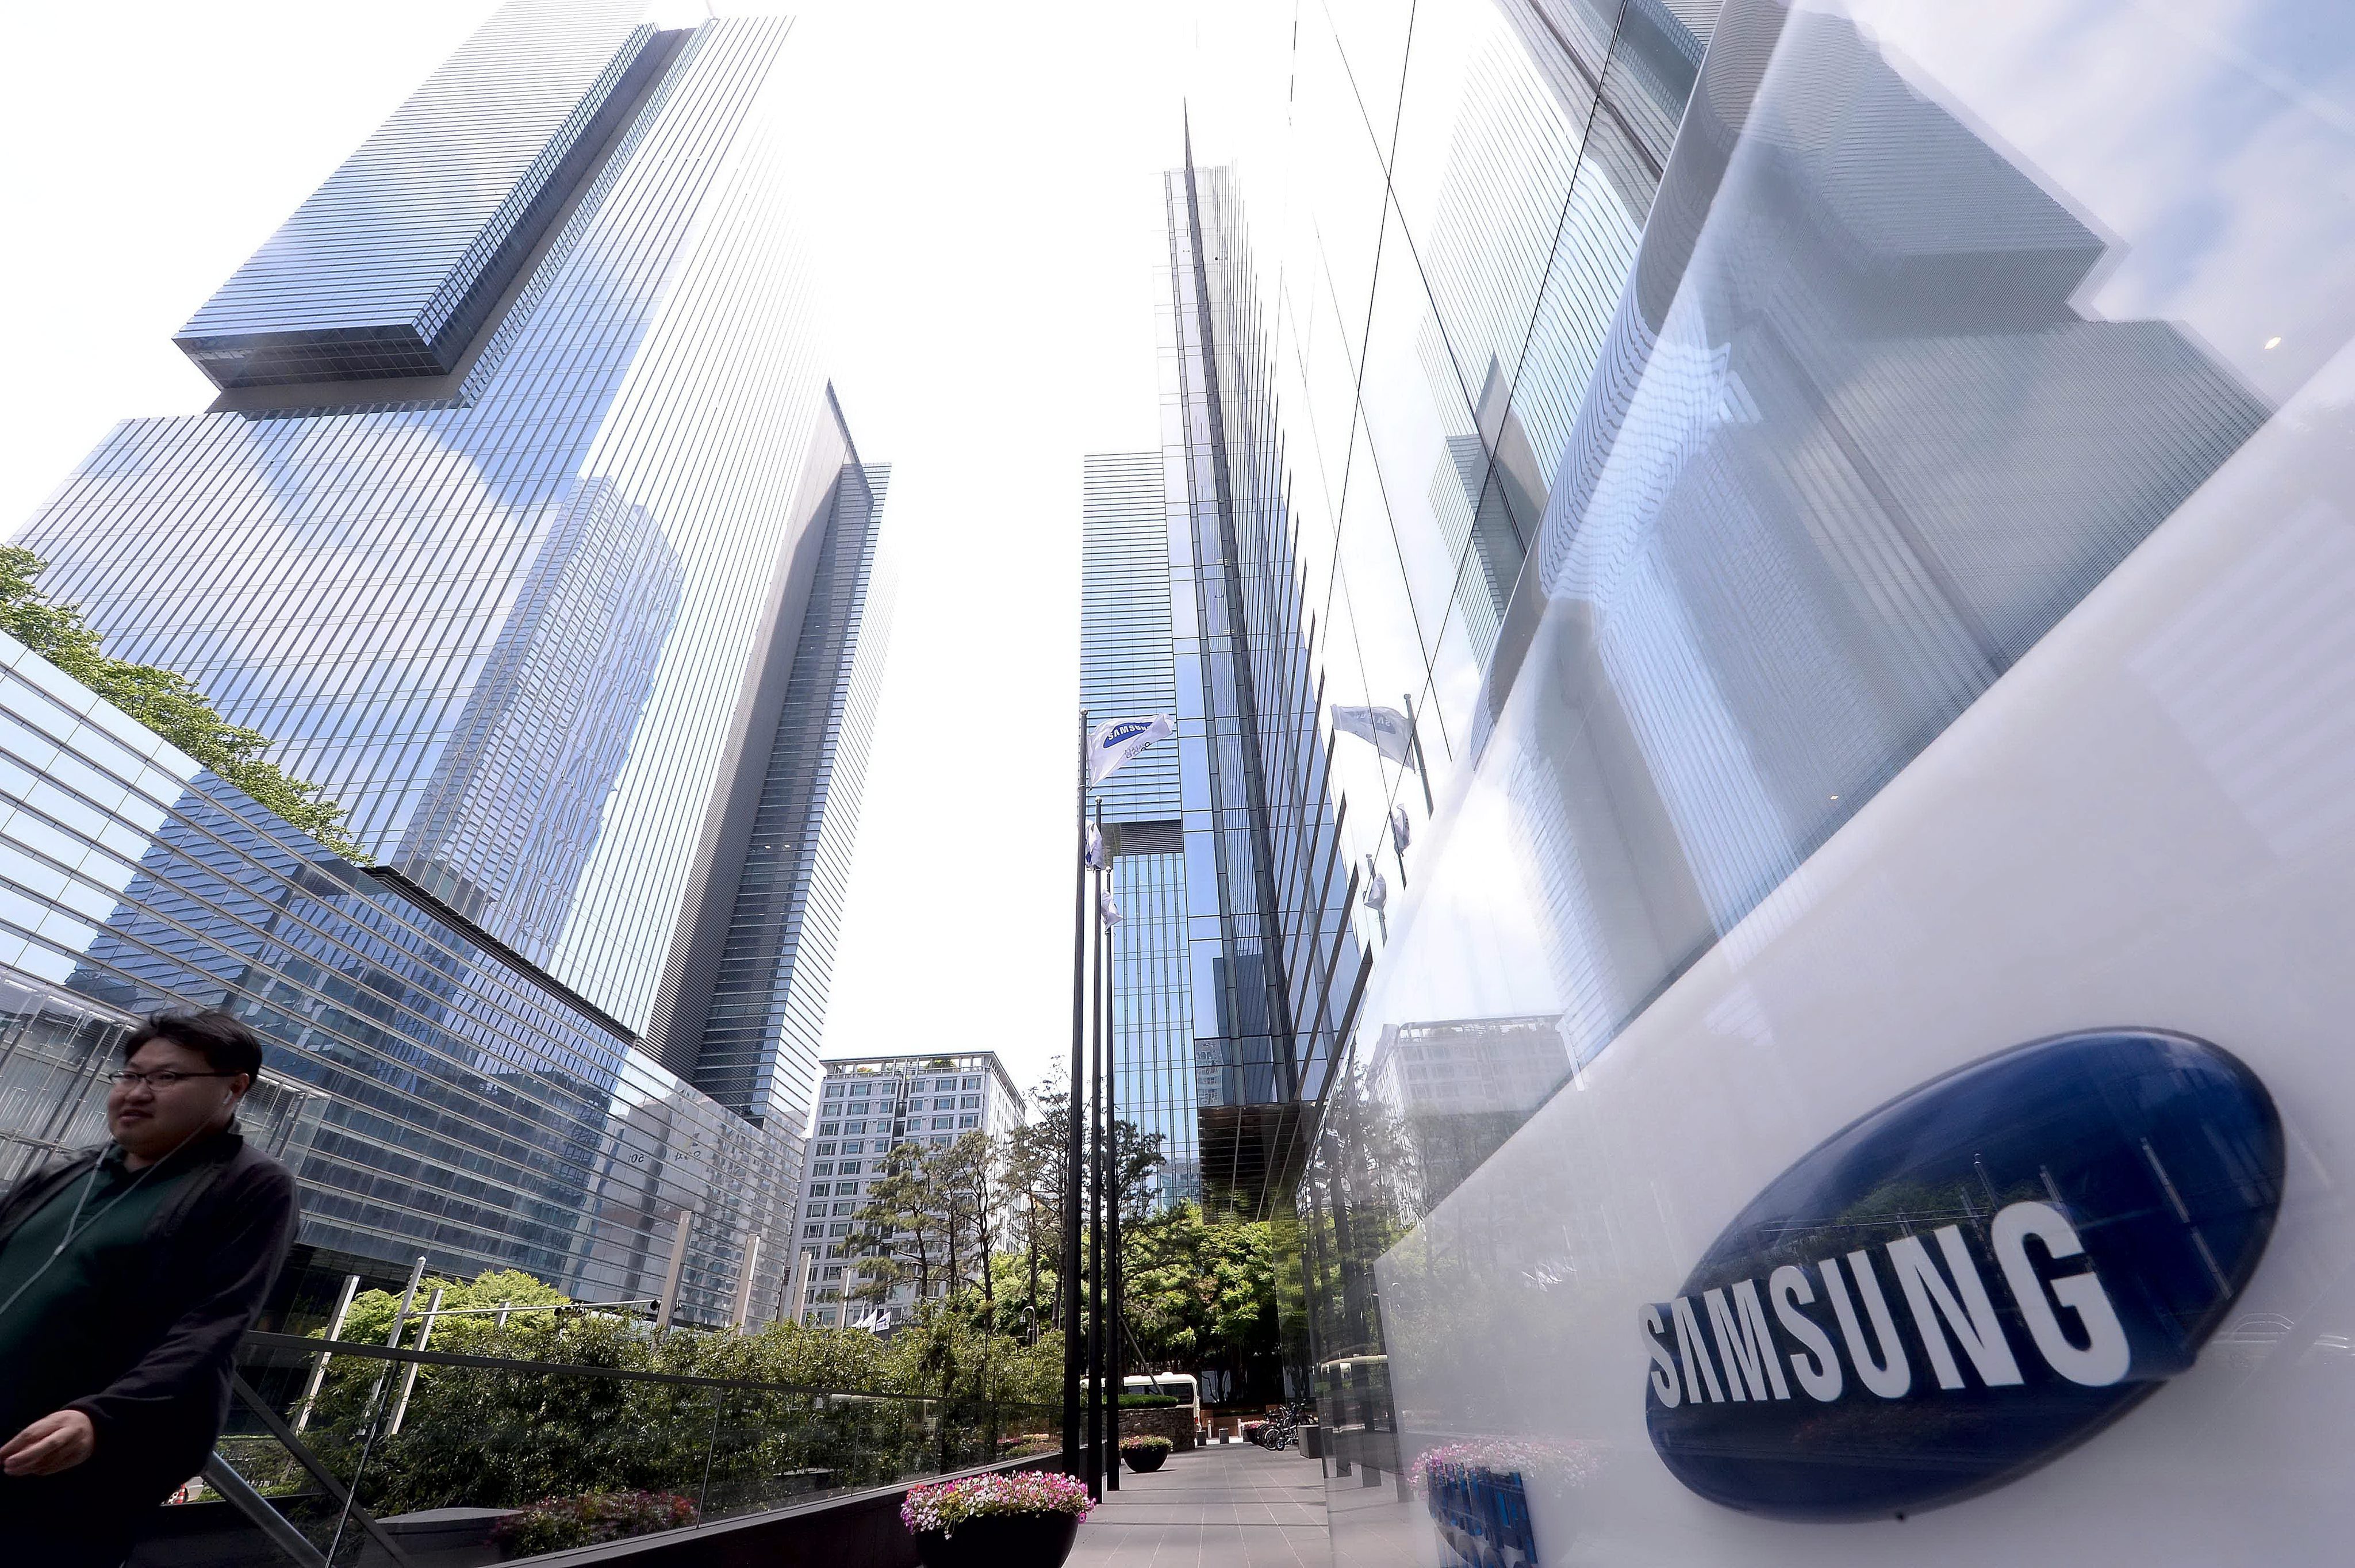 Samsung: Αποζημίωση σε εργάτες της που προσβλήθηκαν από καρκίνο